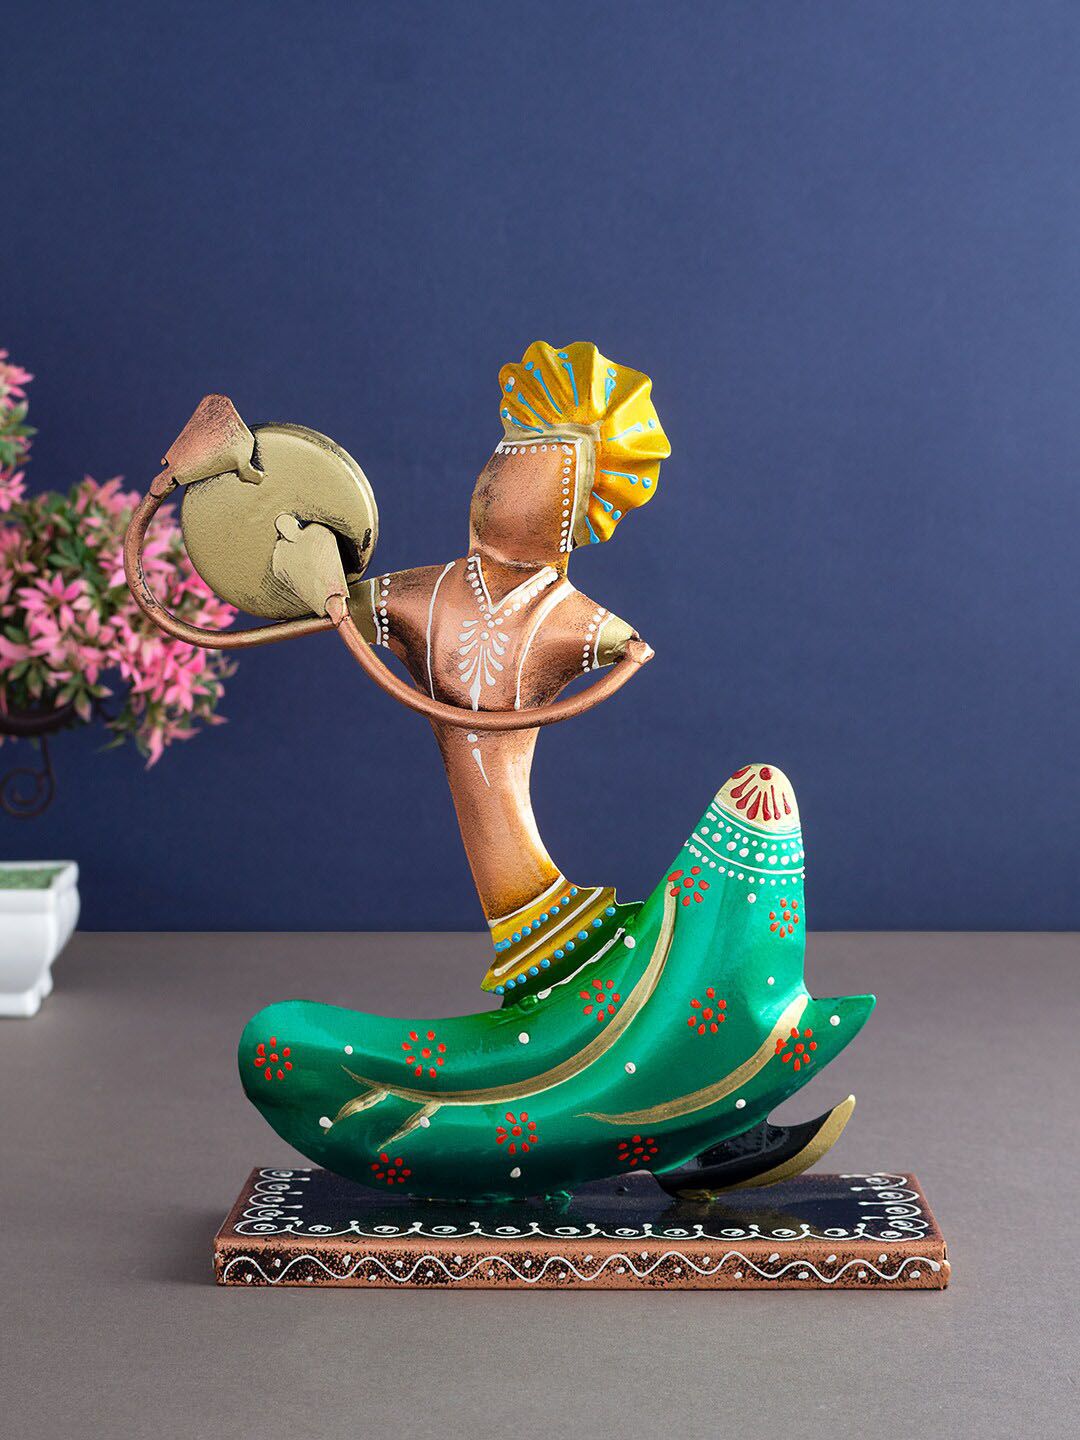 Golden Peacock Musician Decorative Showpieces Price in India